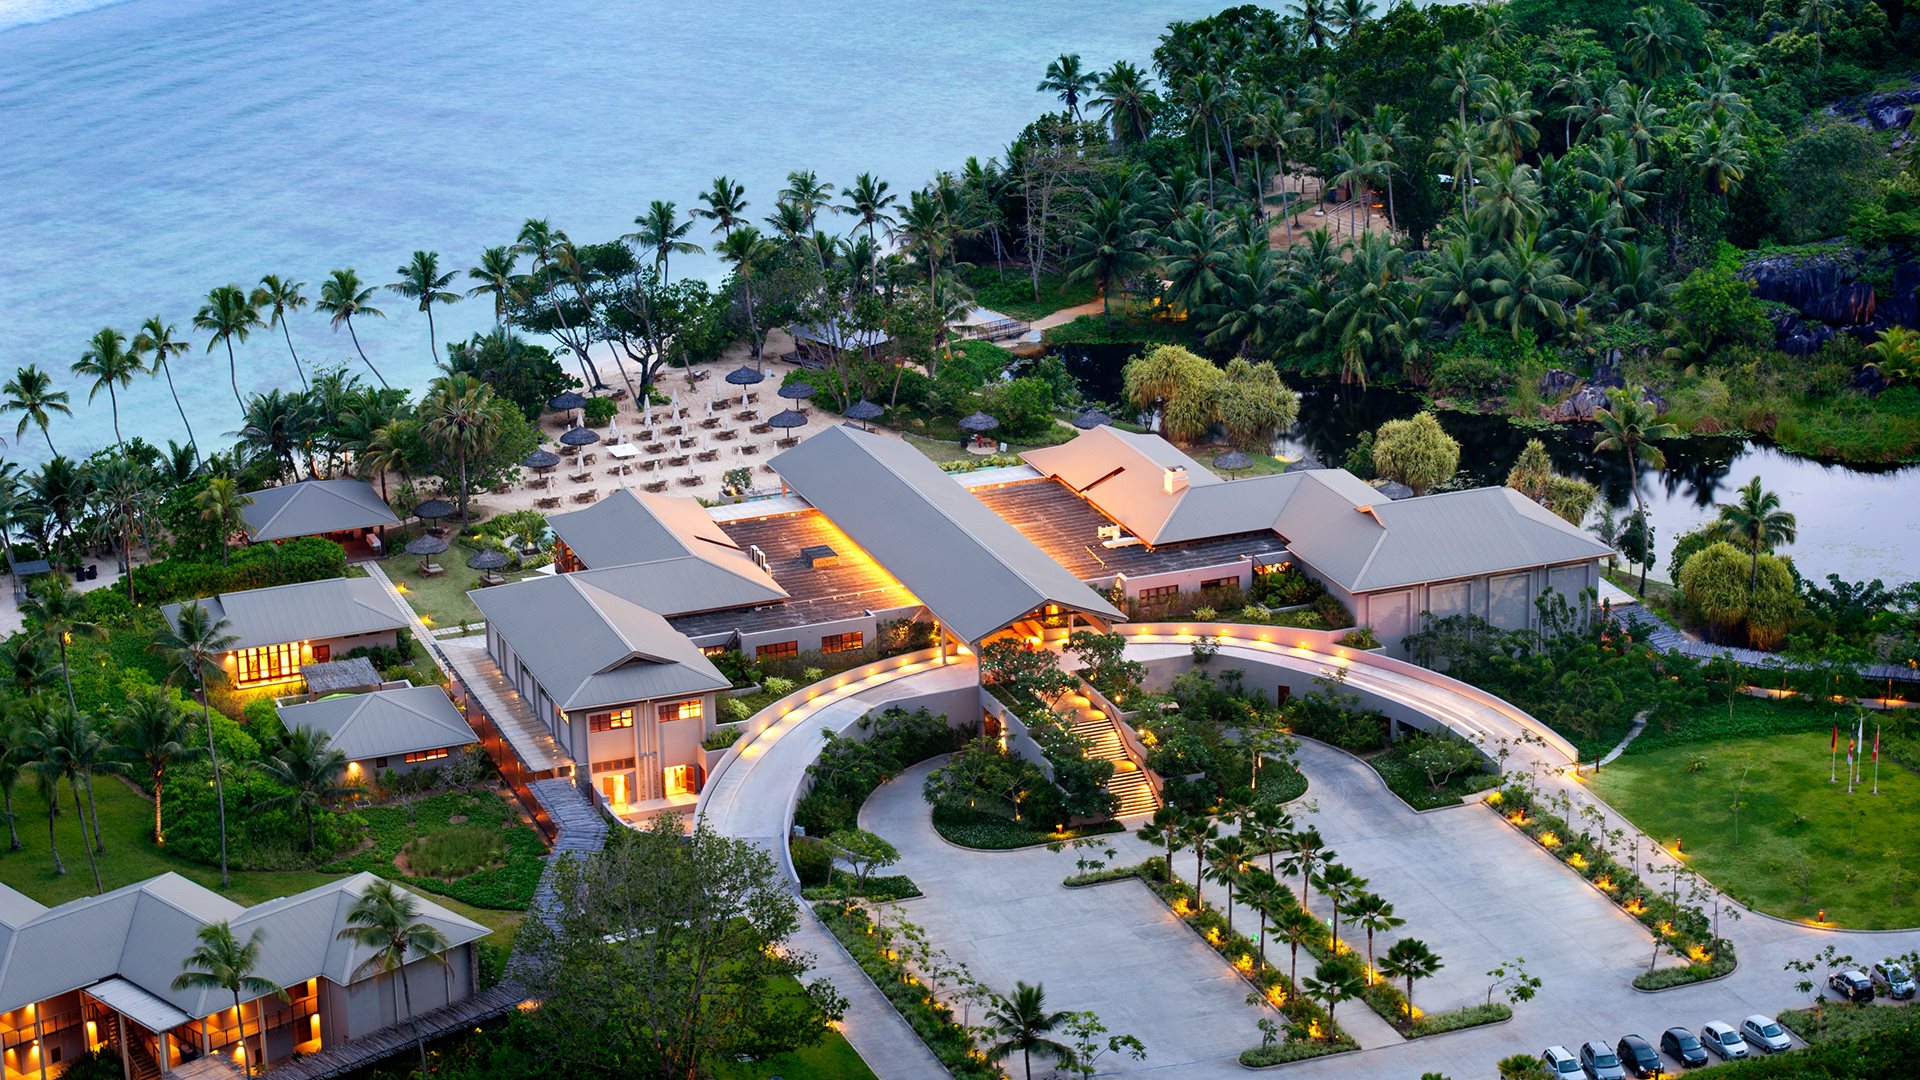 Sejšeli putovanja, Kempinski Seychelles Resort, glavna zgrada